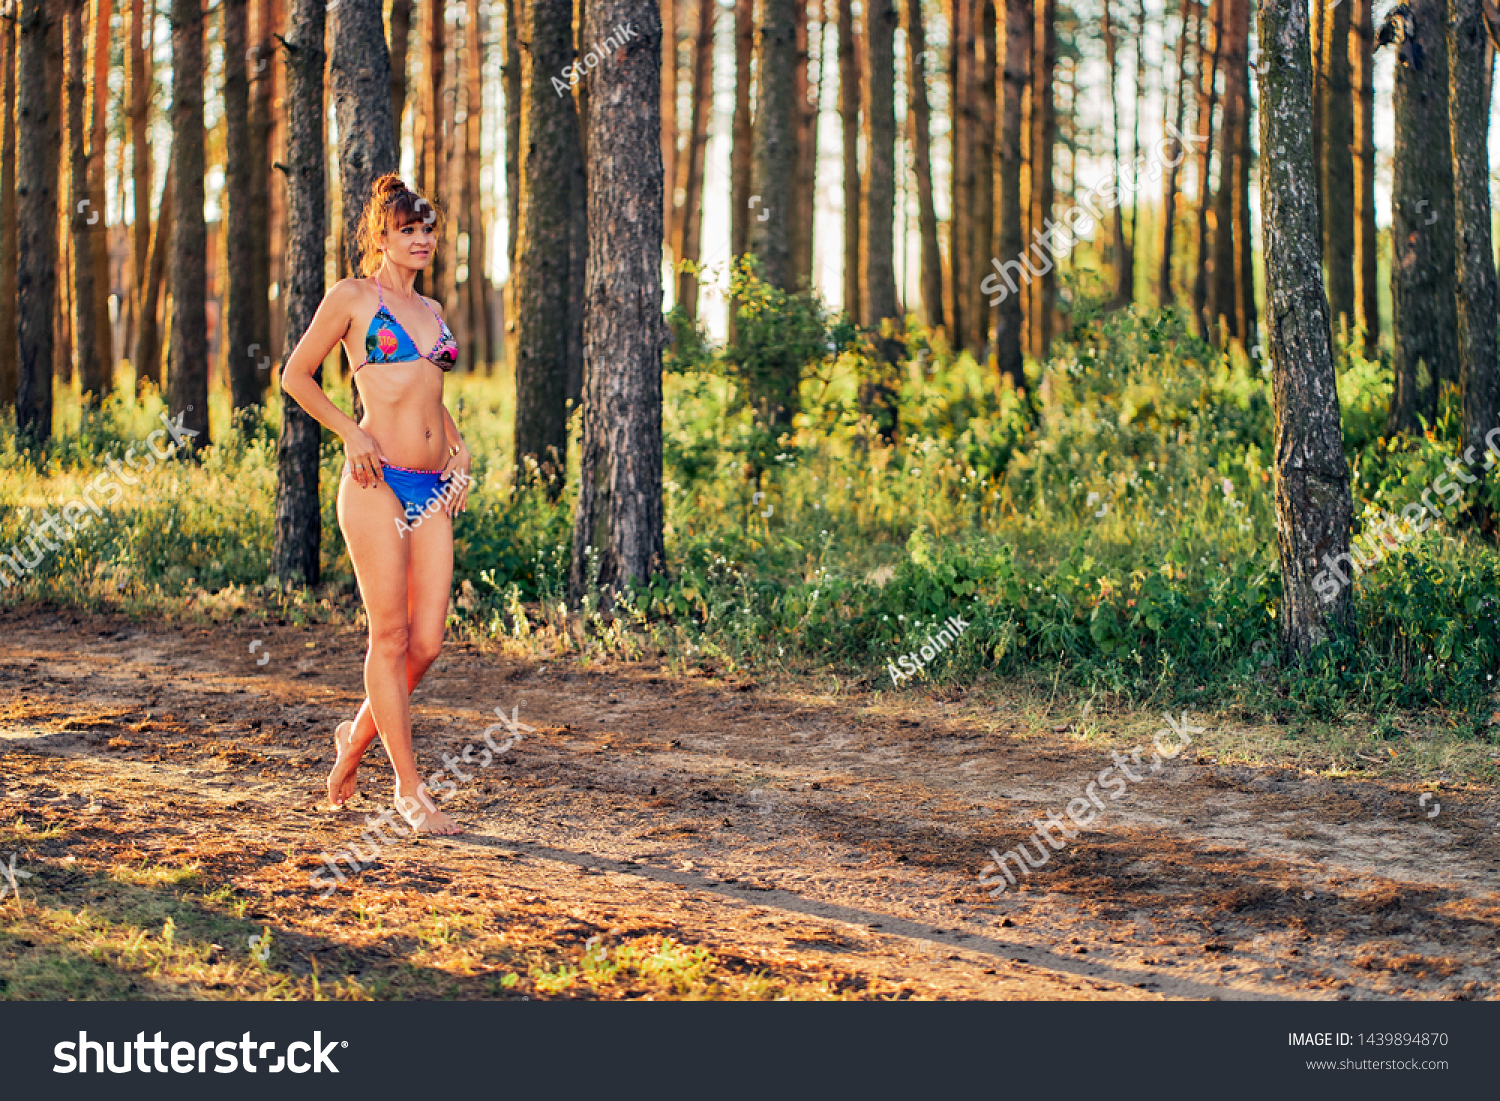 https://image.shutterstock.com/z/stock-photo-slender-woman-barefoot-in-a-bikini-on-nature-at-sunset-1439894870.jpg